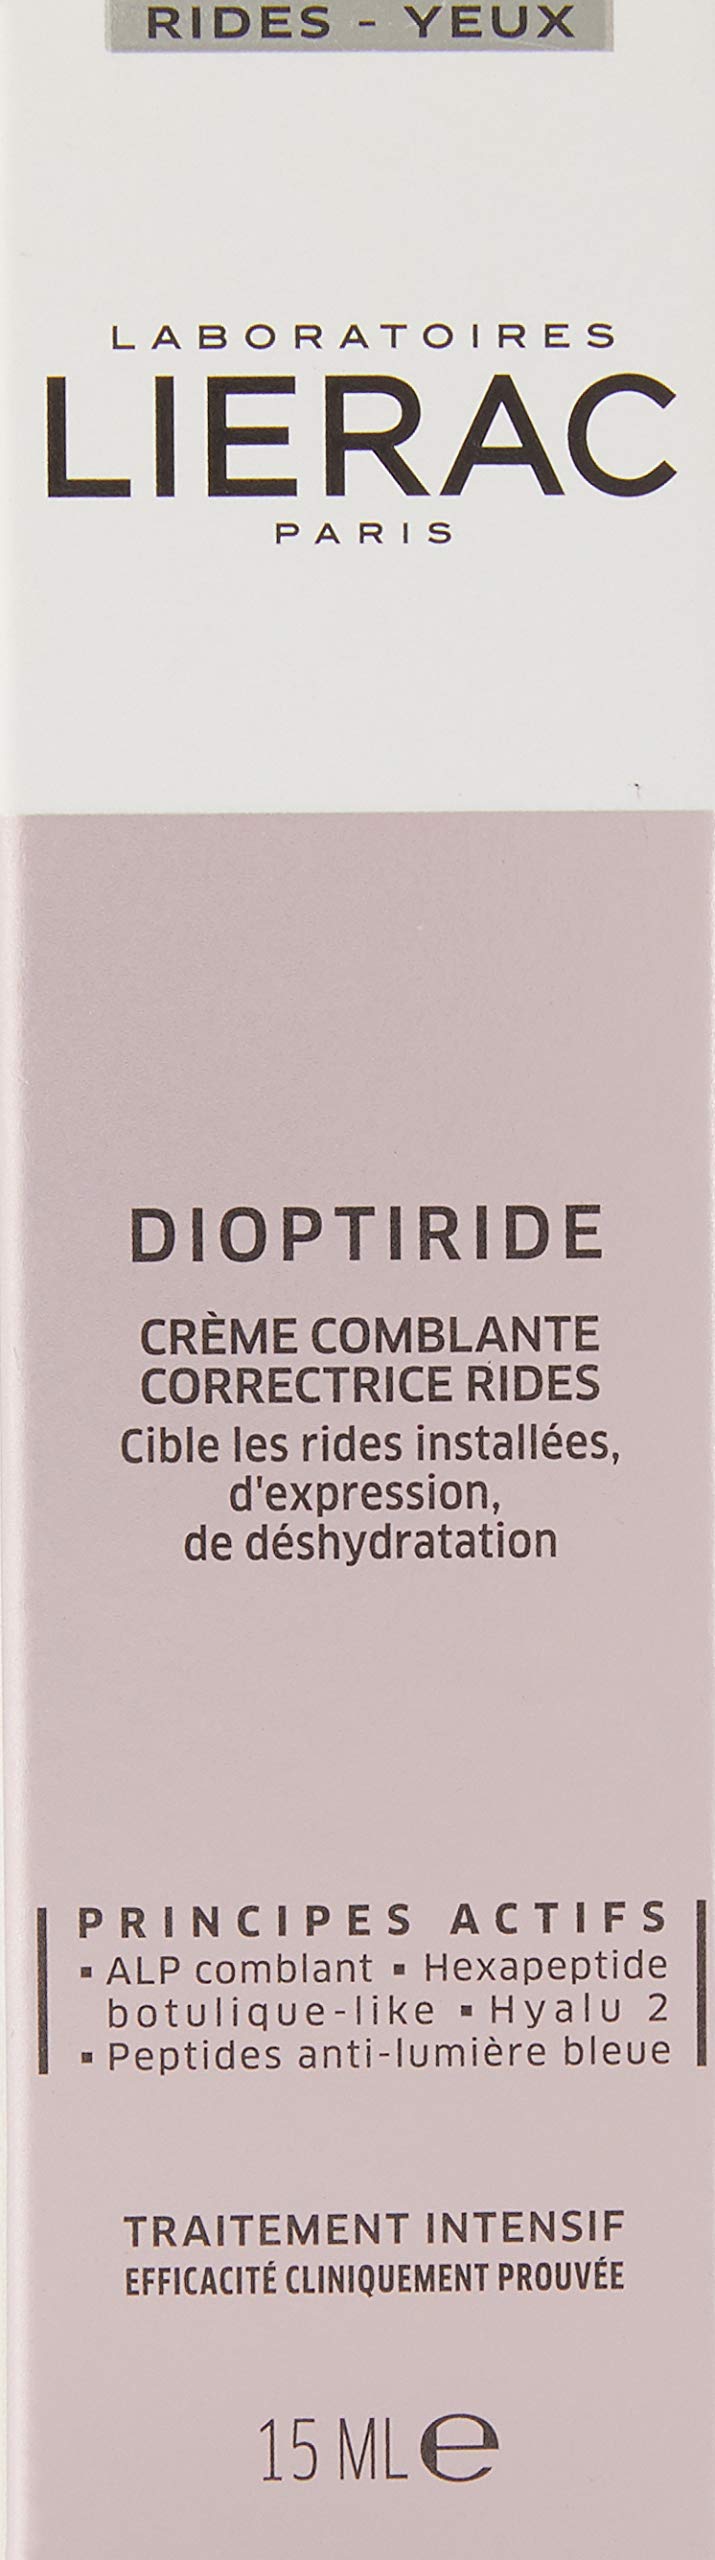 [Australia] - Lierac Dioptiride Wrinkle Correction Filling Cream 15ml 